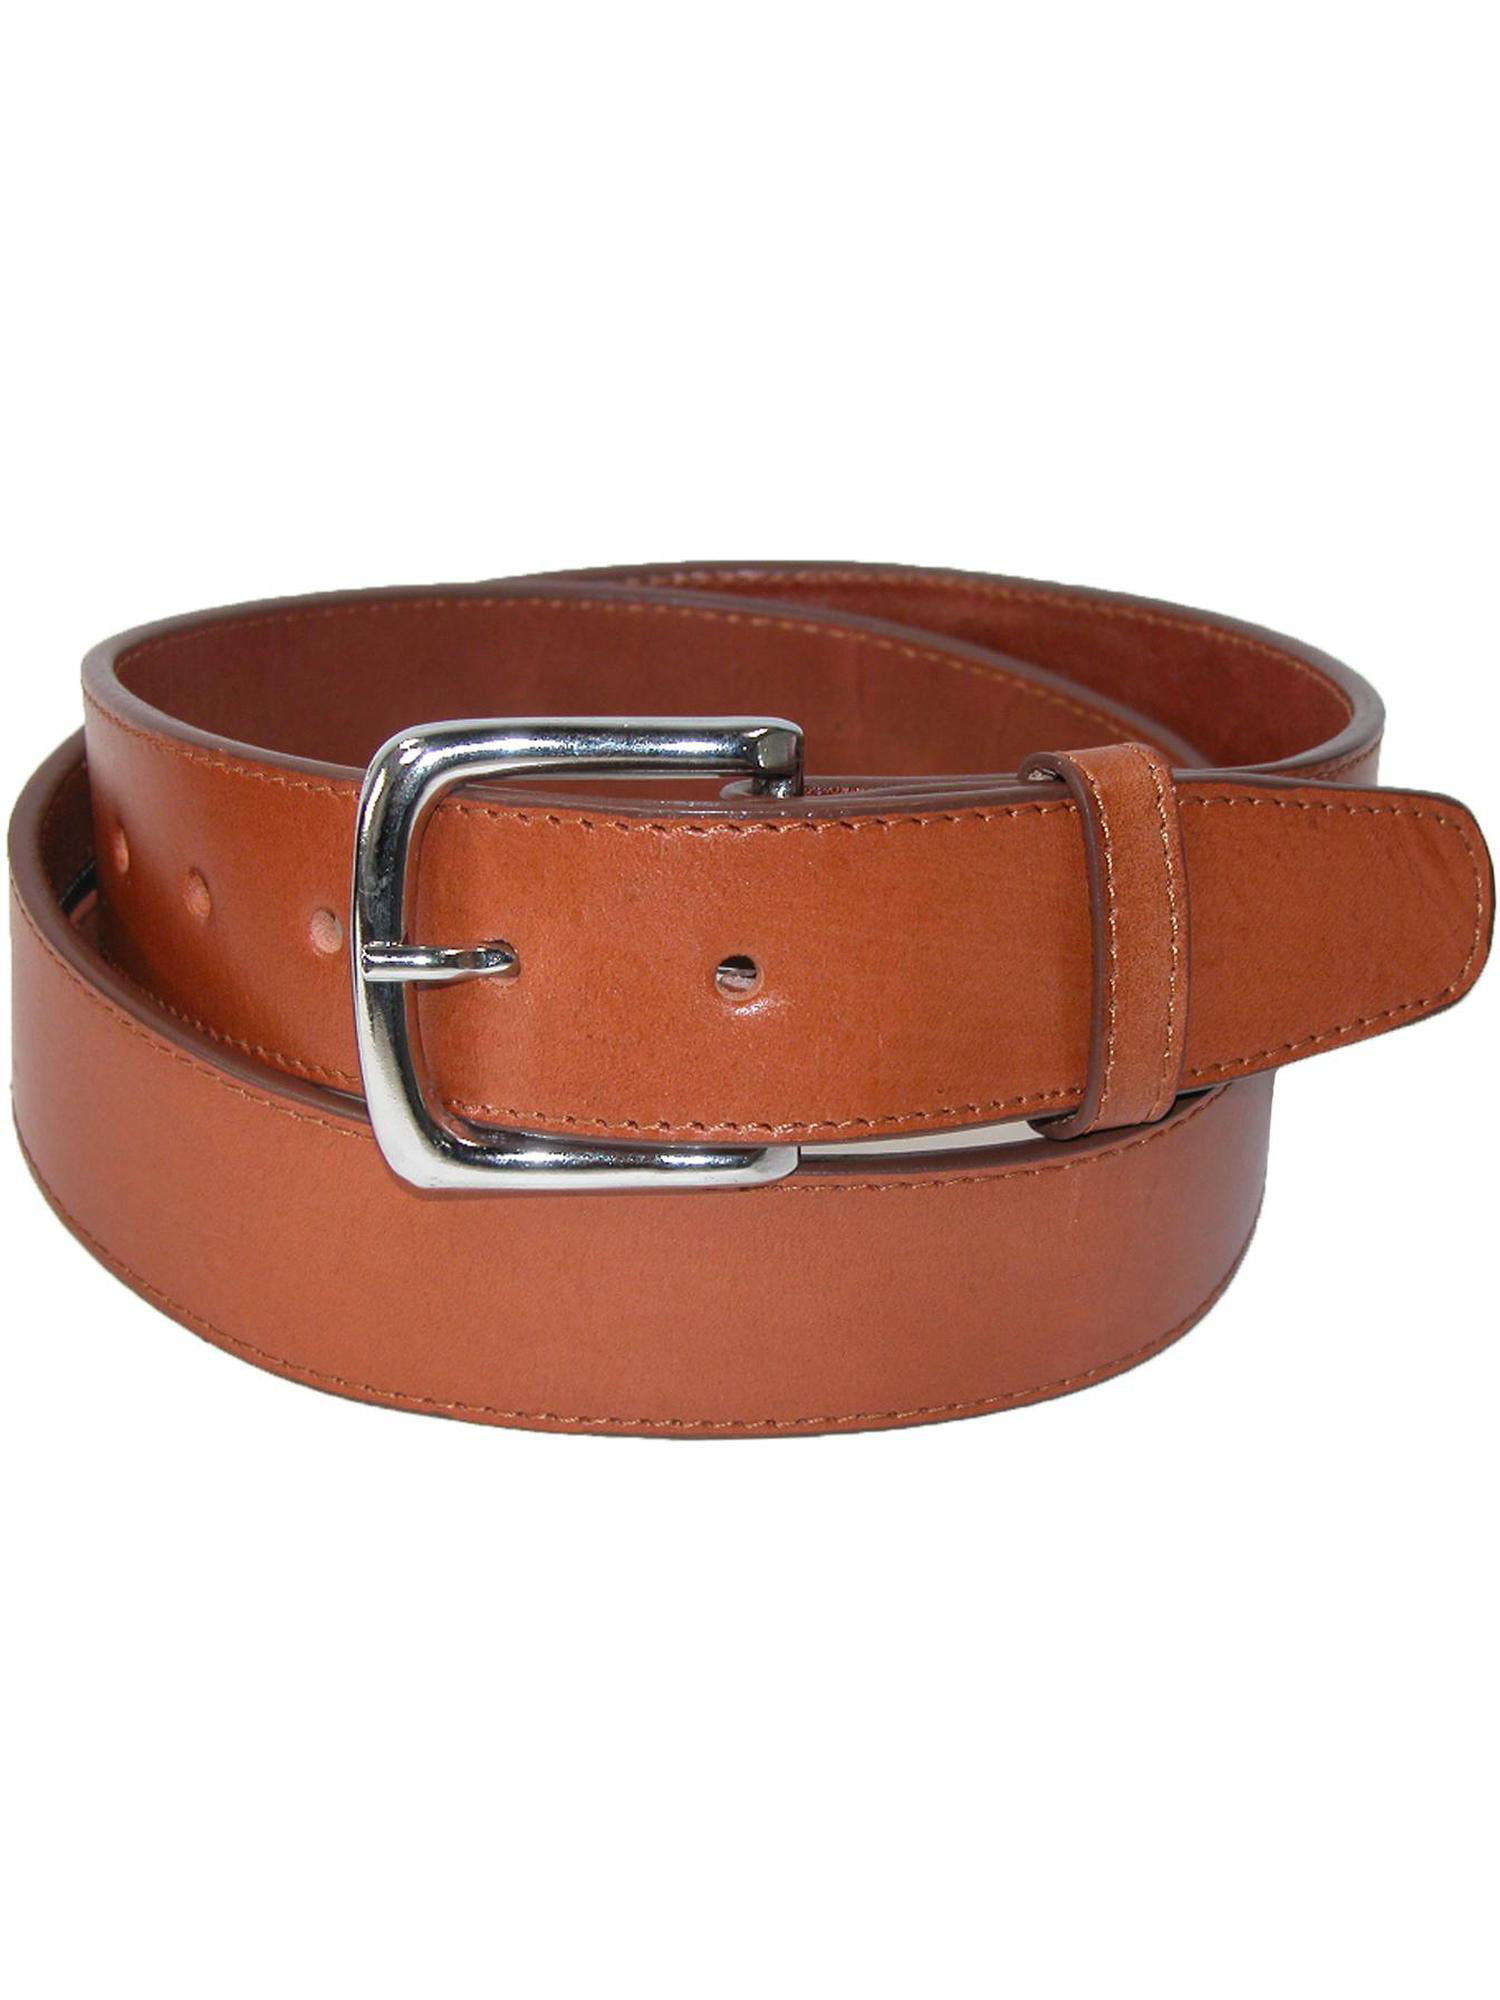 Men's Leather Money Belt Removable Buckle - Walmart.com